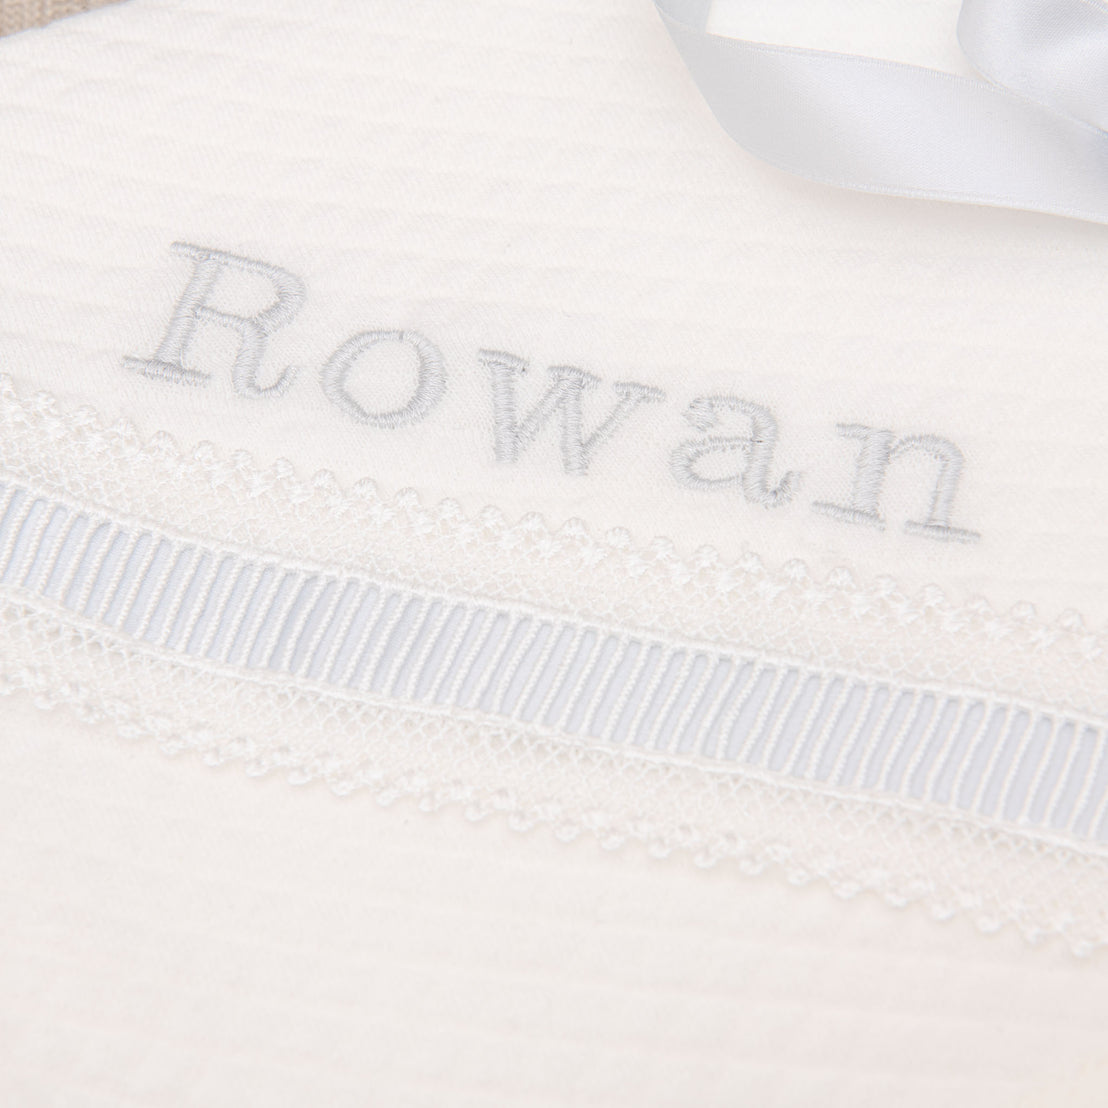 Rowan Accessory Bundle - Save 15%